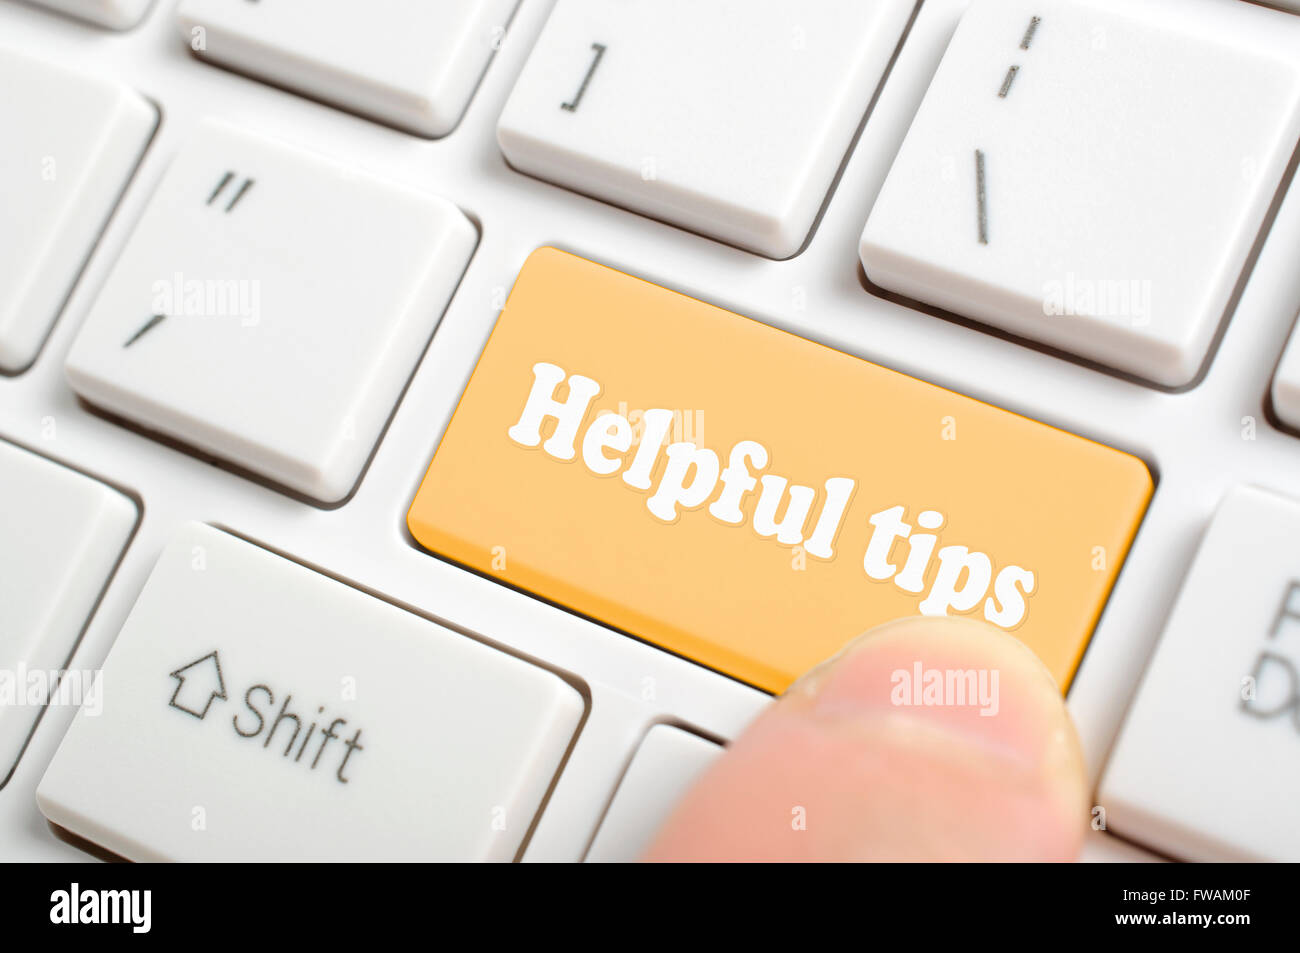 Pressing brown helpful tips key on keyboard Stock Photo